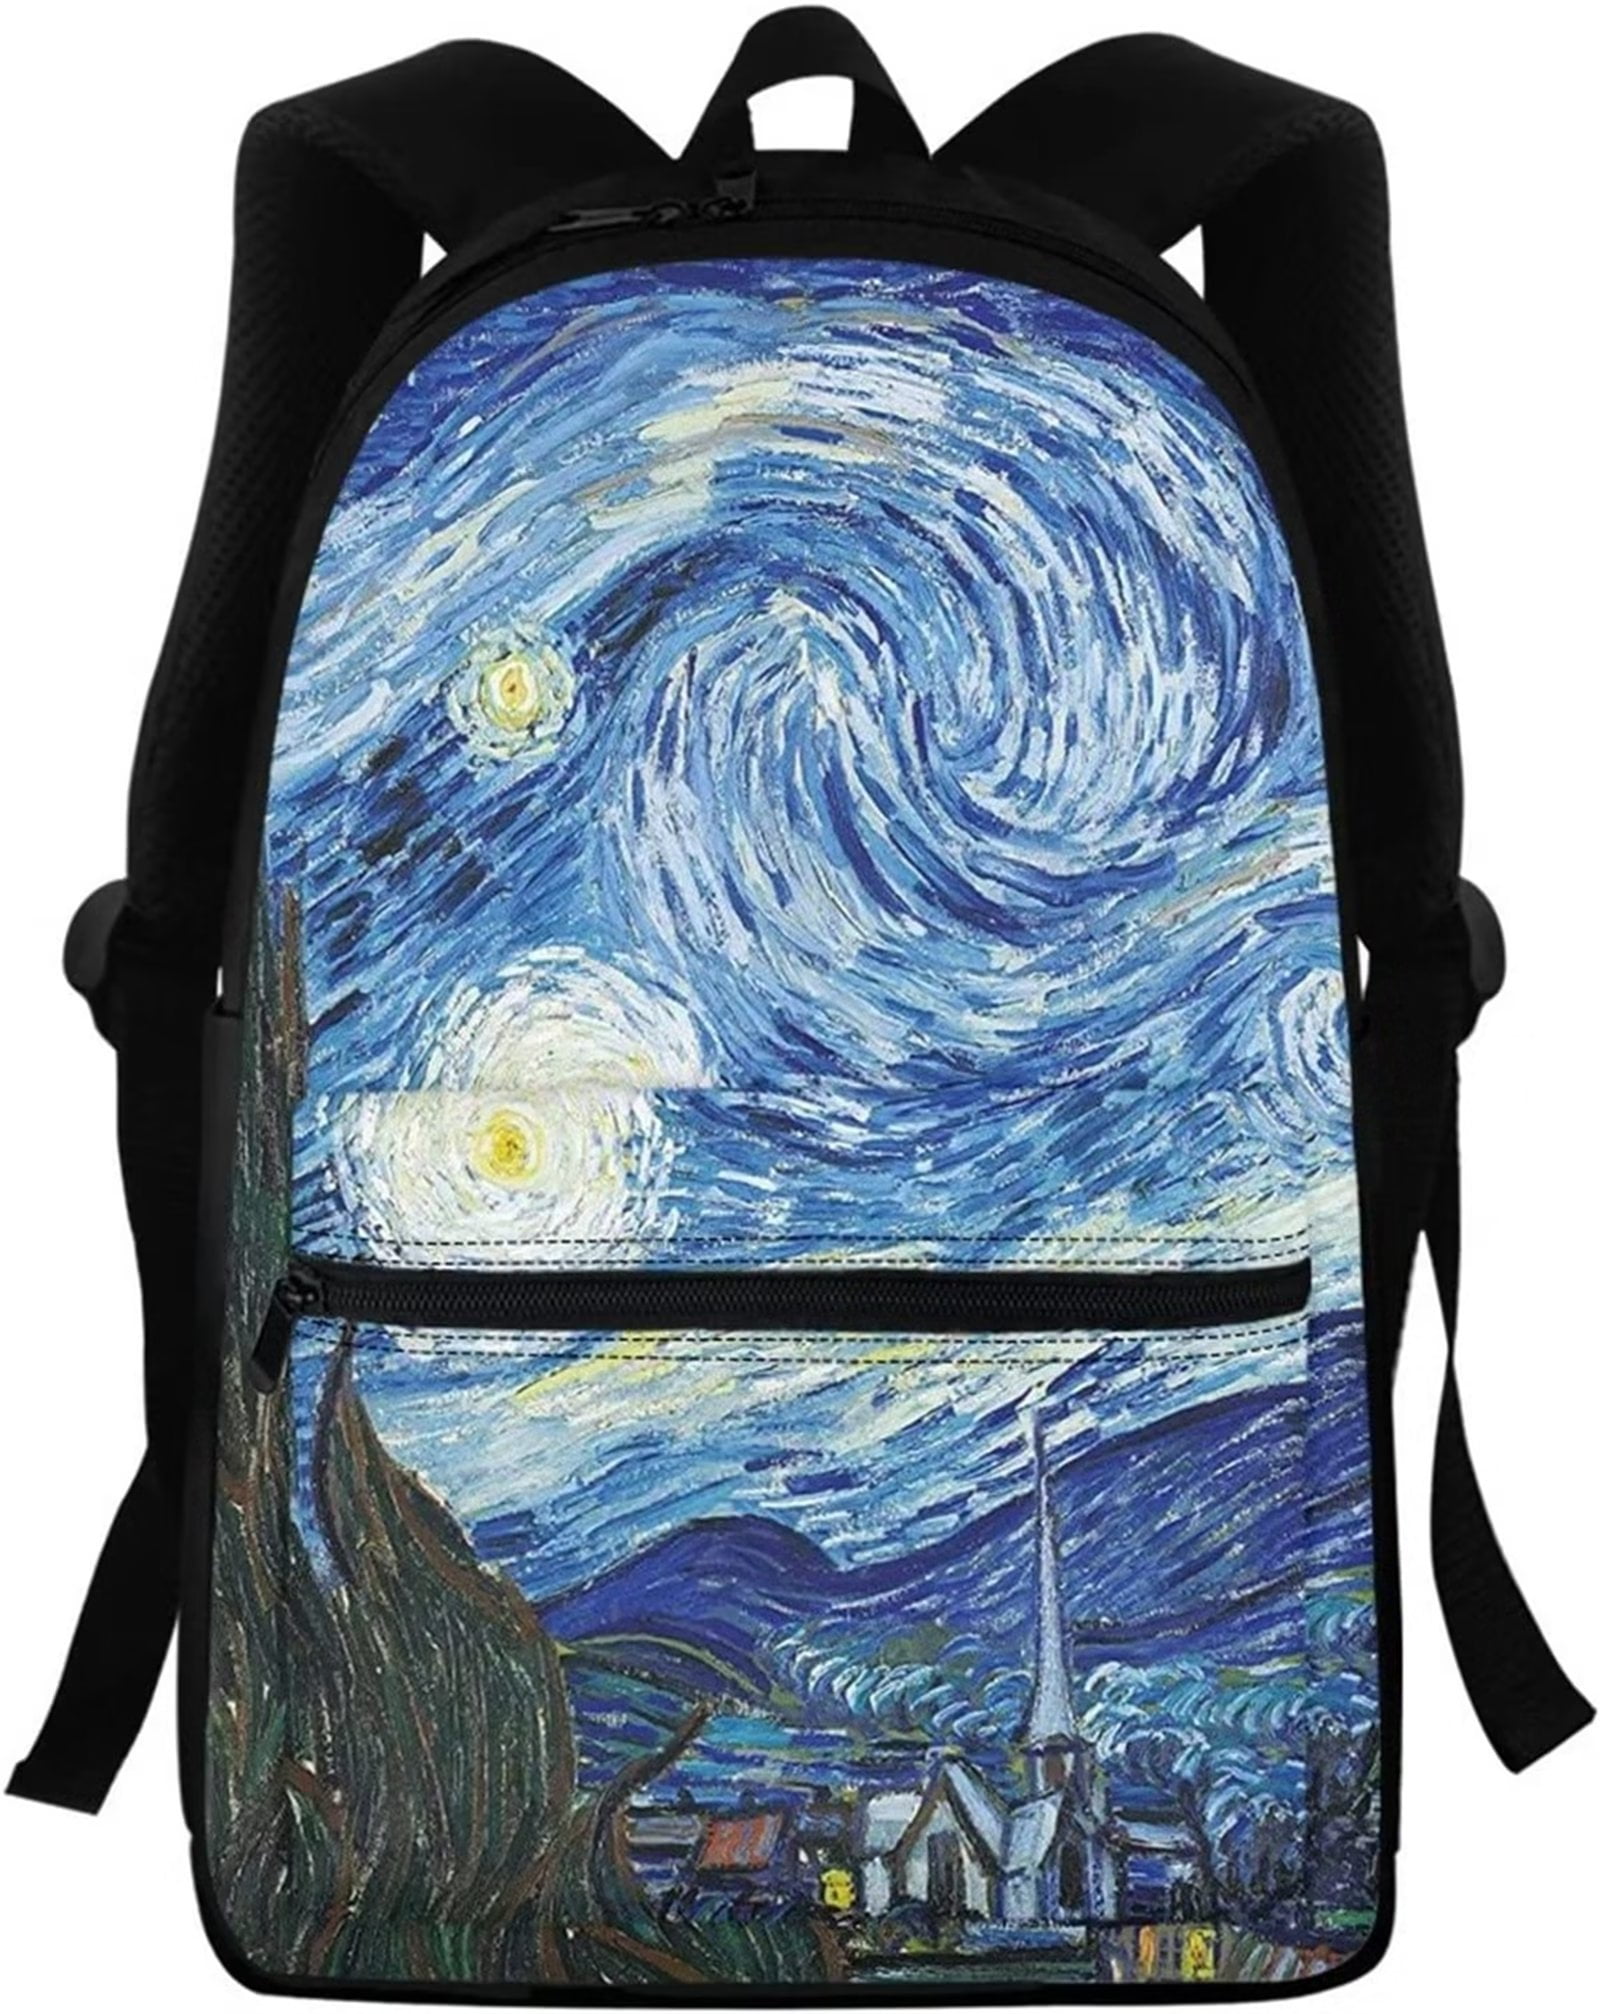 FKELYI Van Gogh Starry Night Back Pack,Casual High Teens Children